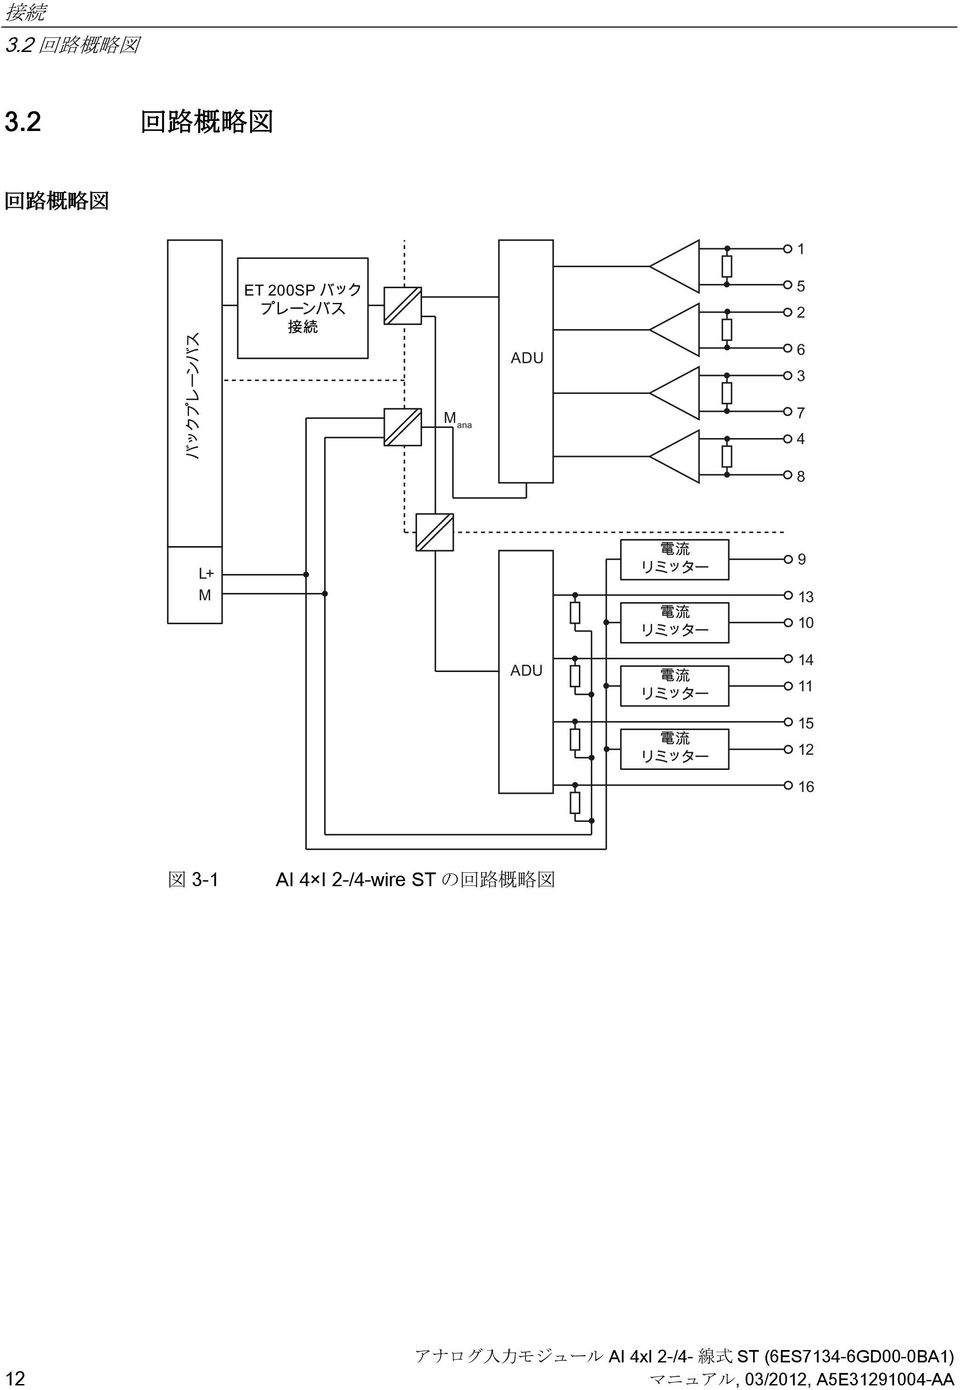 AI 4 I 2-/4-wire ST の 回 路 概